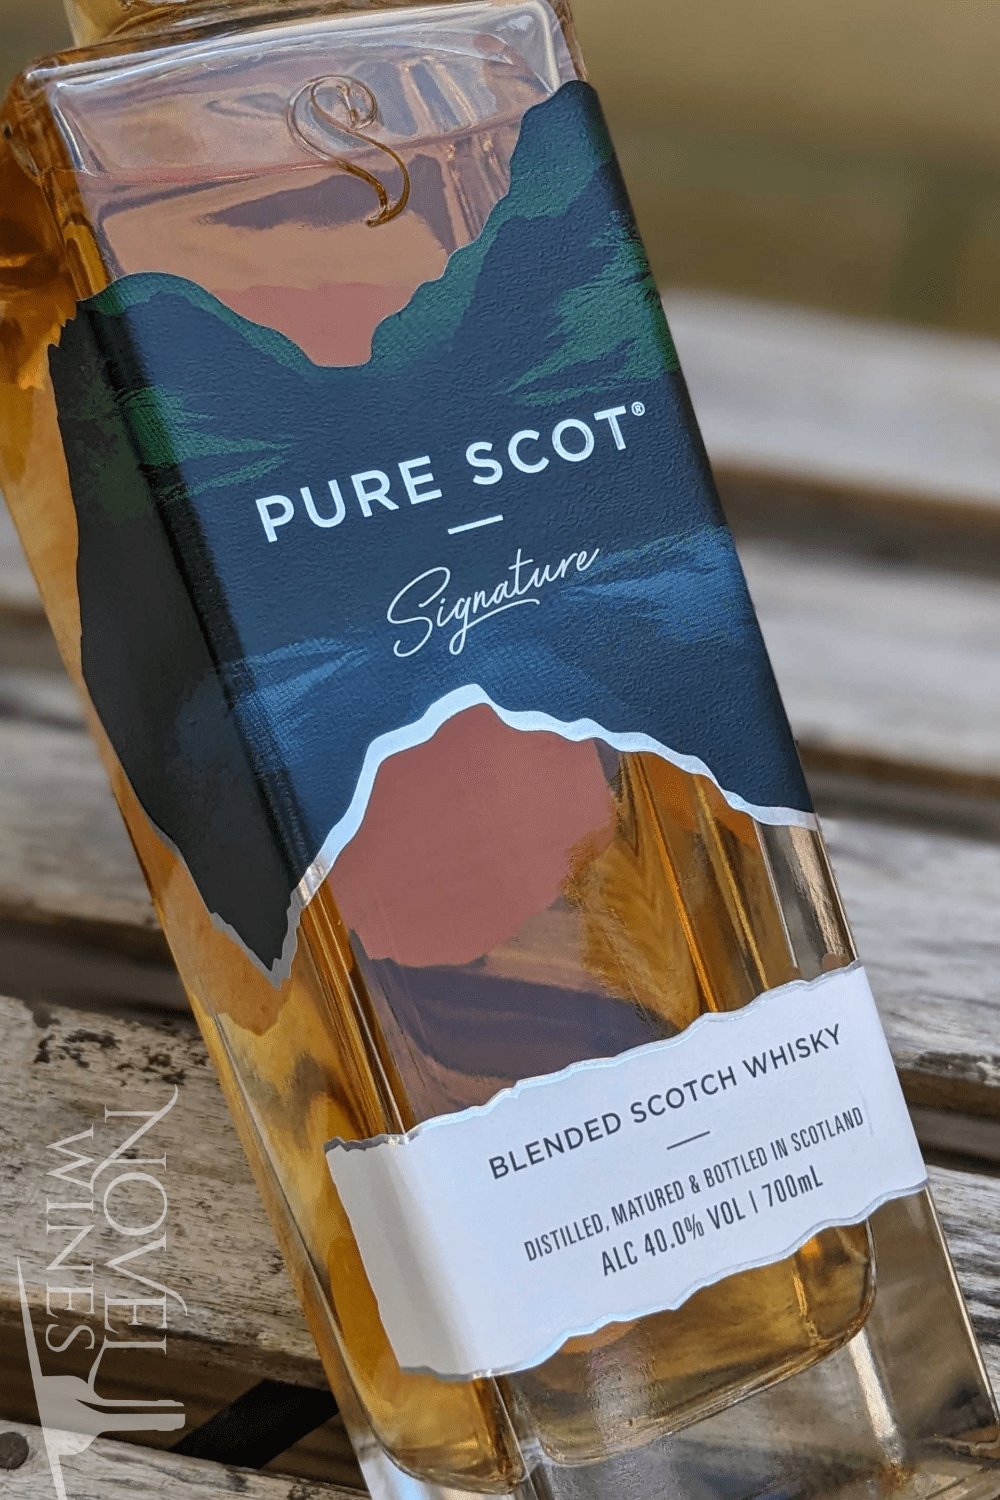 Bladnoch Whisky Pure Scot Signature Original Whisky 40.0% abv, Scotland